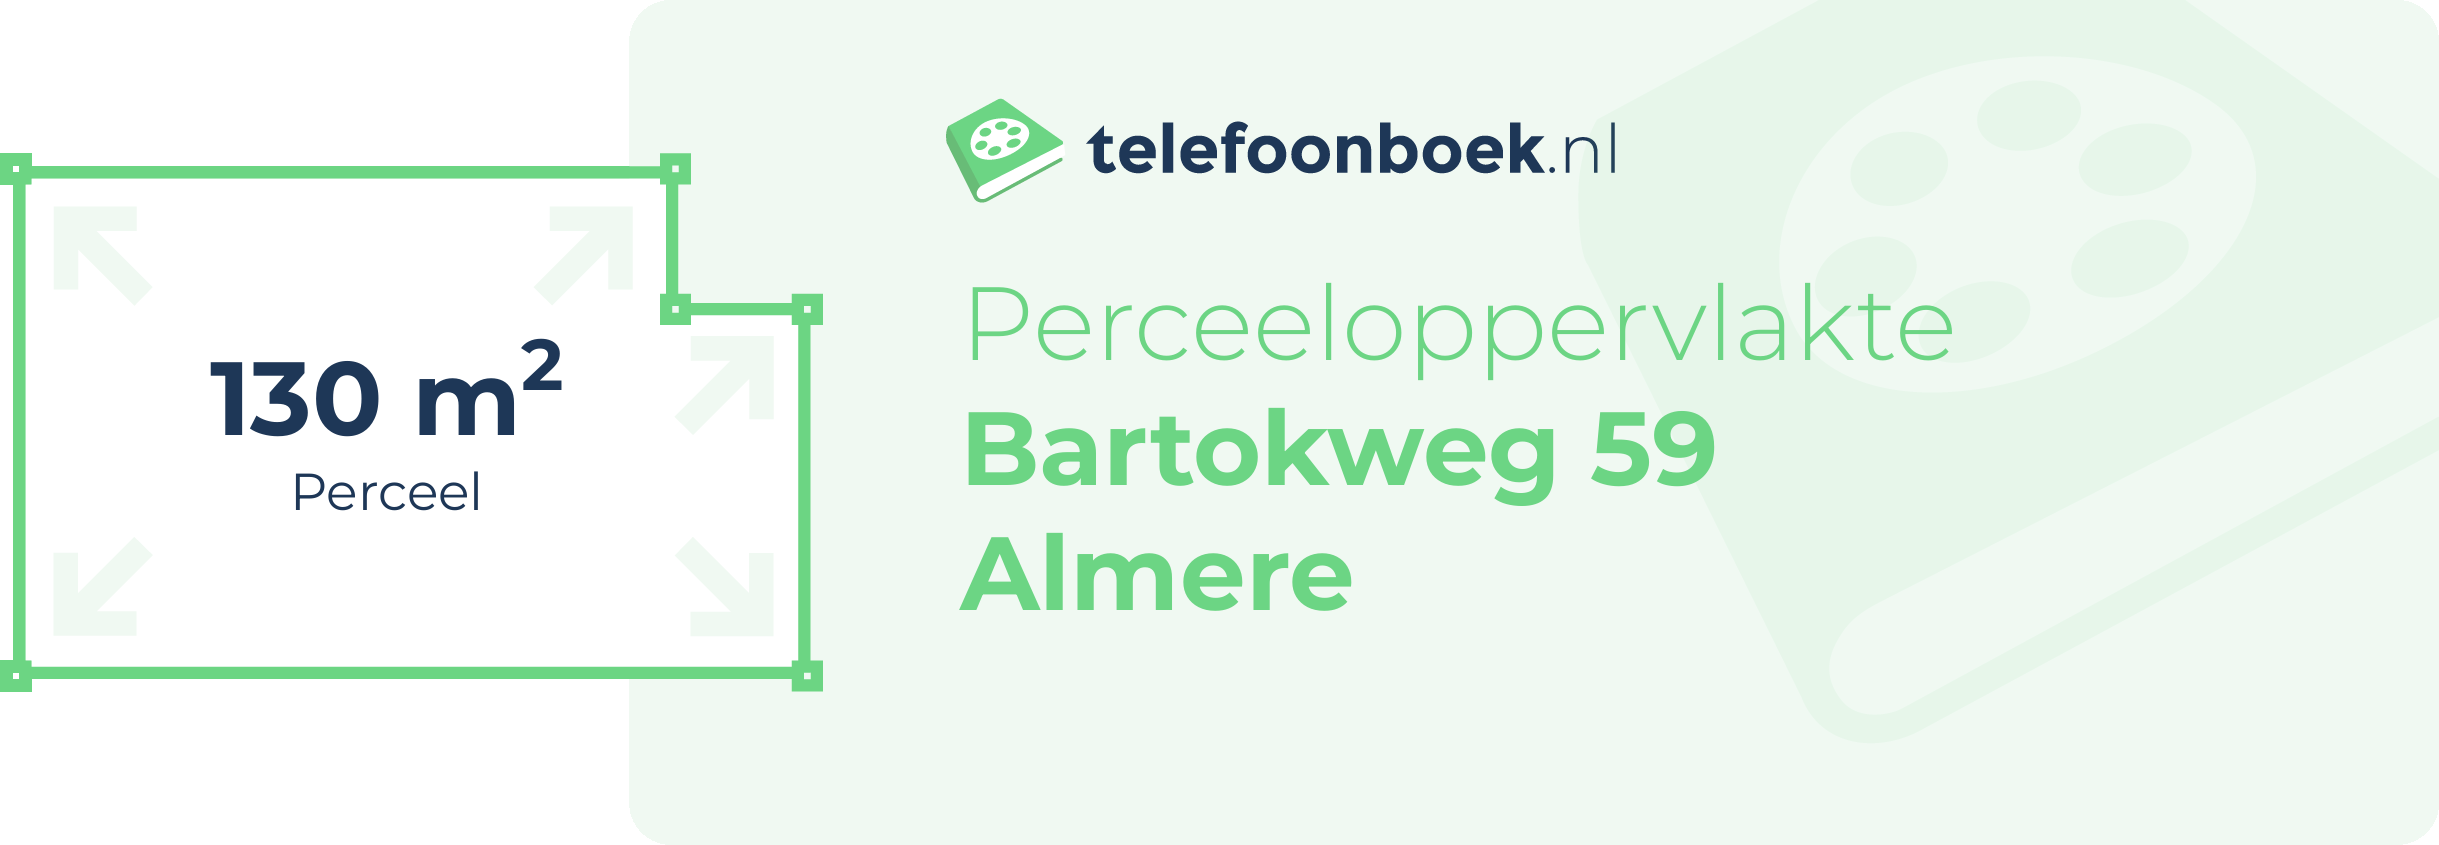 Perceeloppervlakte Bartokweg 59 Almere